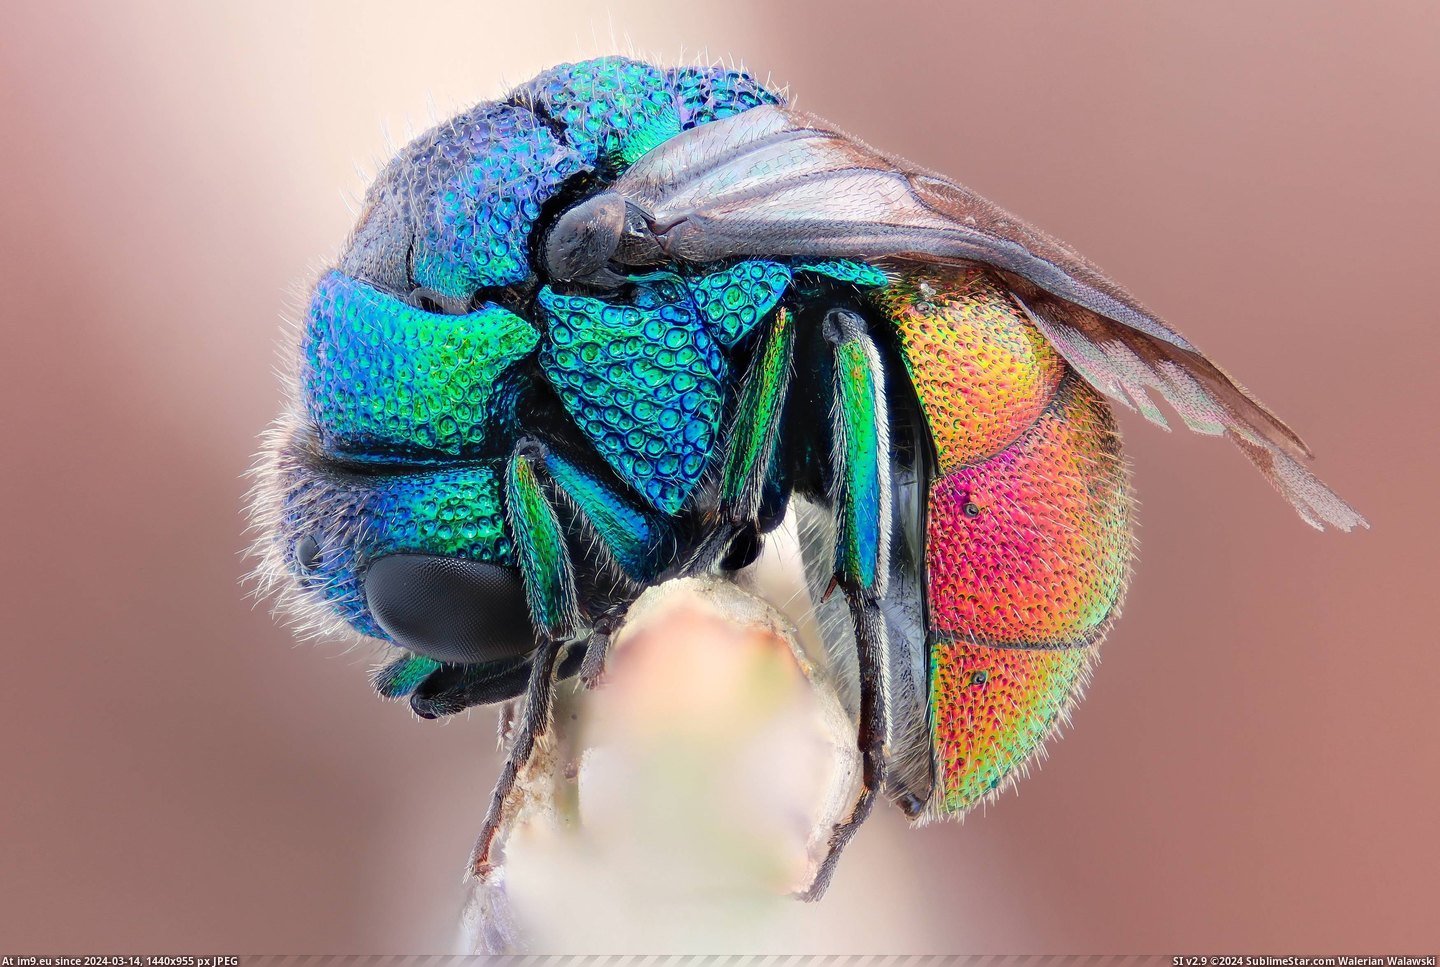 #Rainbow  #Fly [Pics] Rainbow Fly Pic. (Изображение из альбом My r/PICS favs))